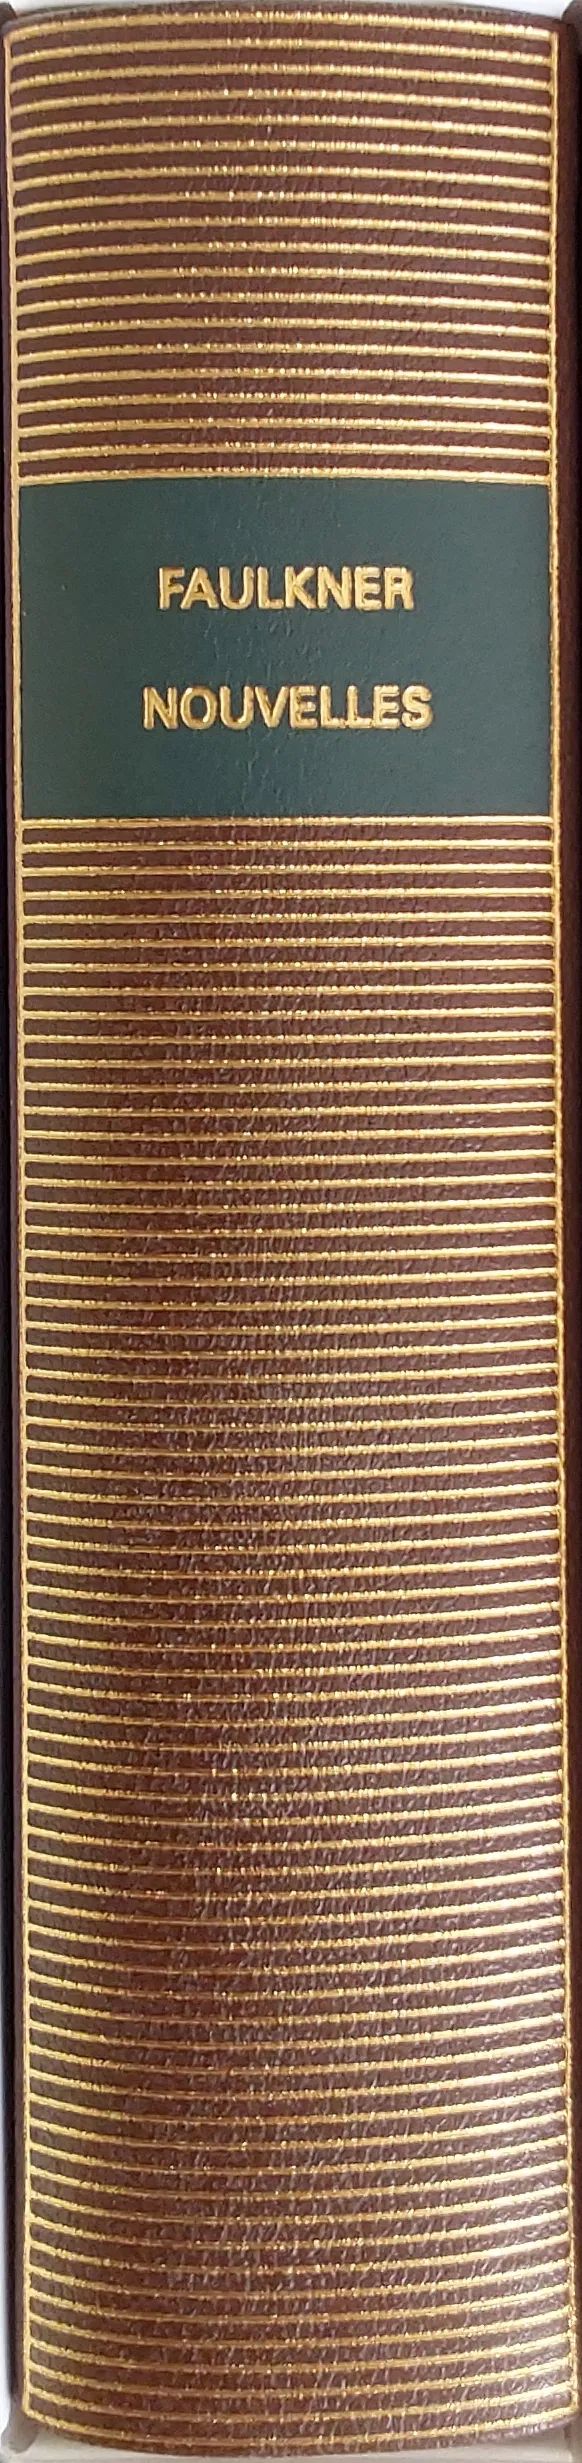 Volume 620 de Faulkner dans la Bibliothèque de la Pléiade